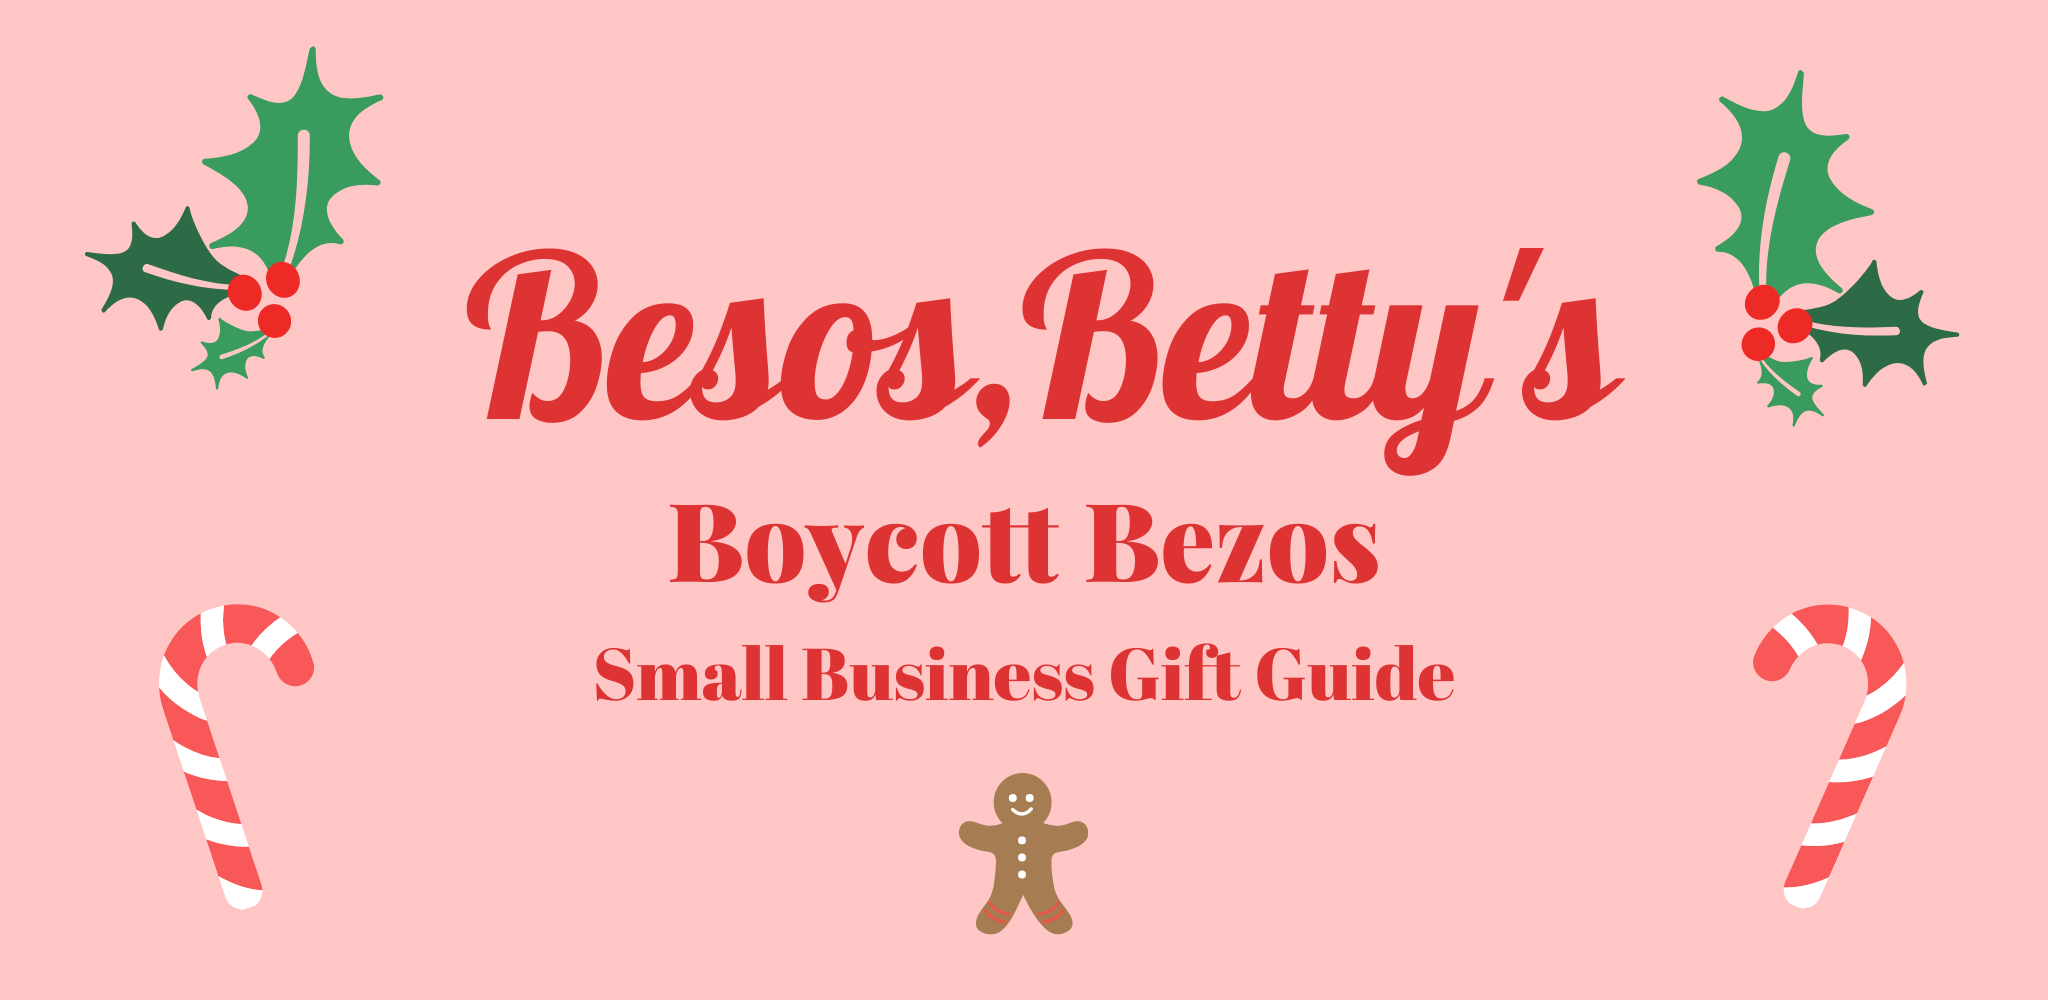 Besos Betty’s Boycott Bezos Small Business Gift Guide 2020